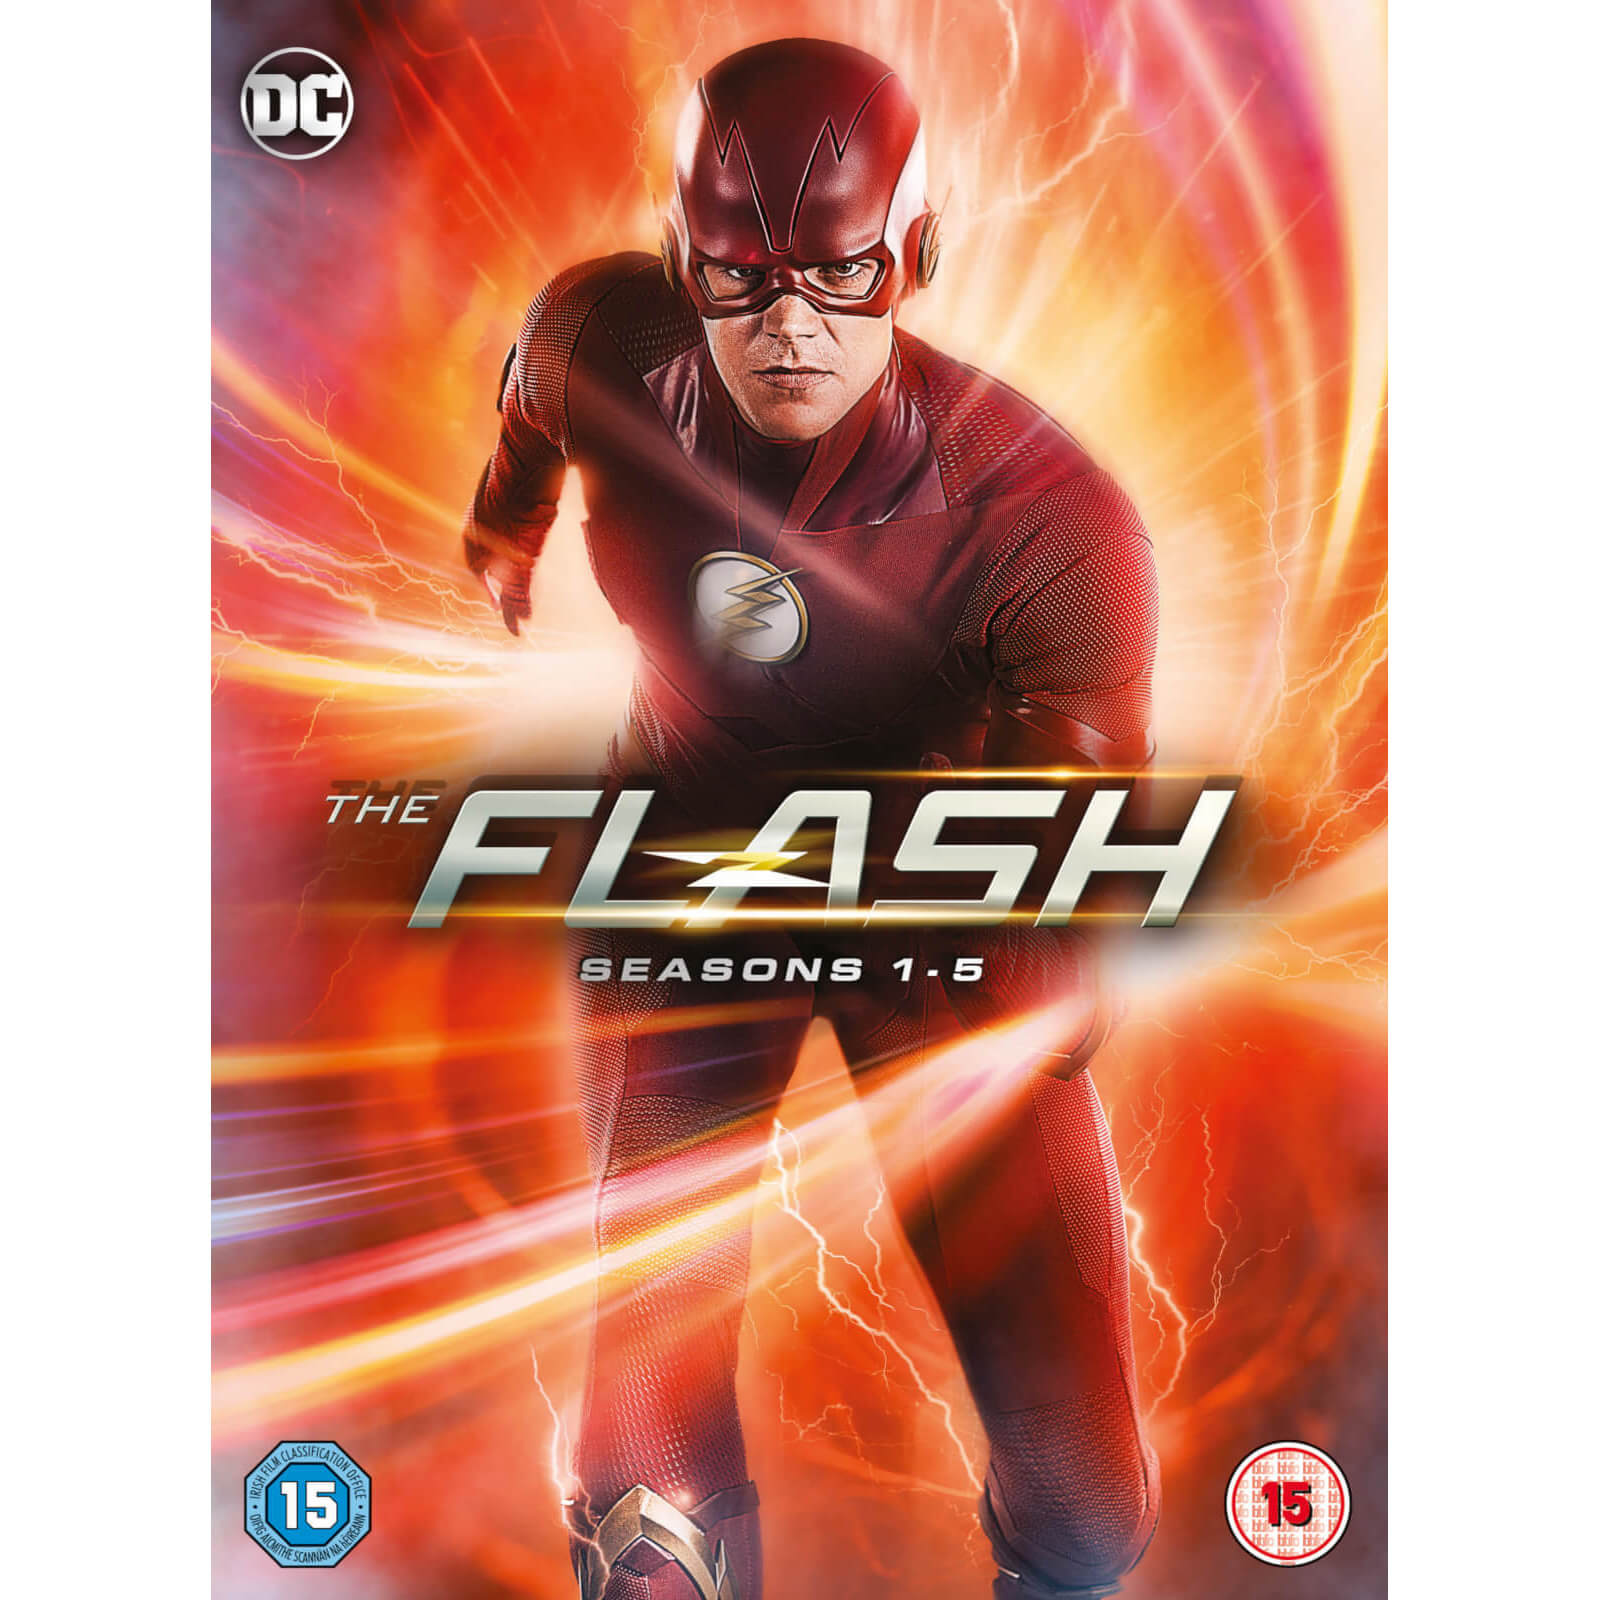 Flash full 1. Флэш DVD.